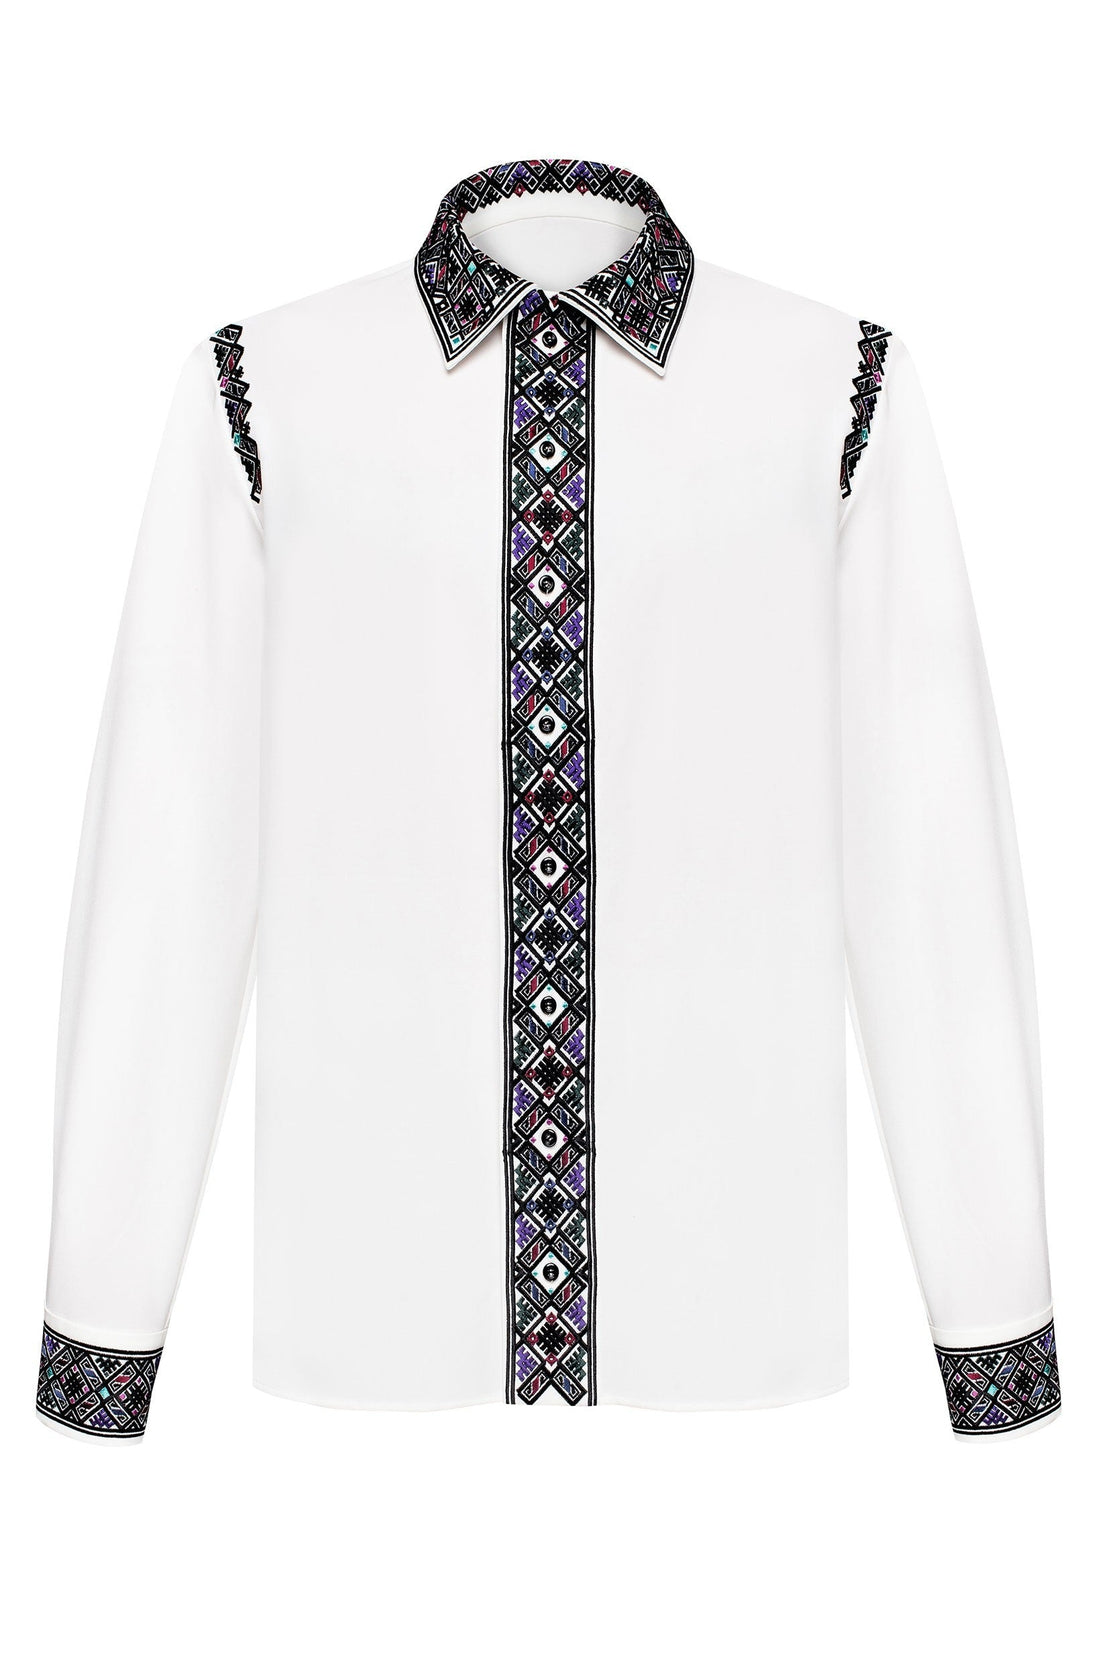 CHERNIKOVA Classic shirt with embroidery